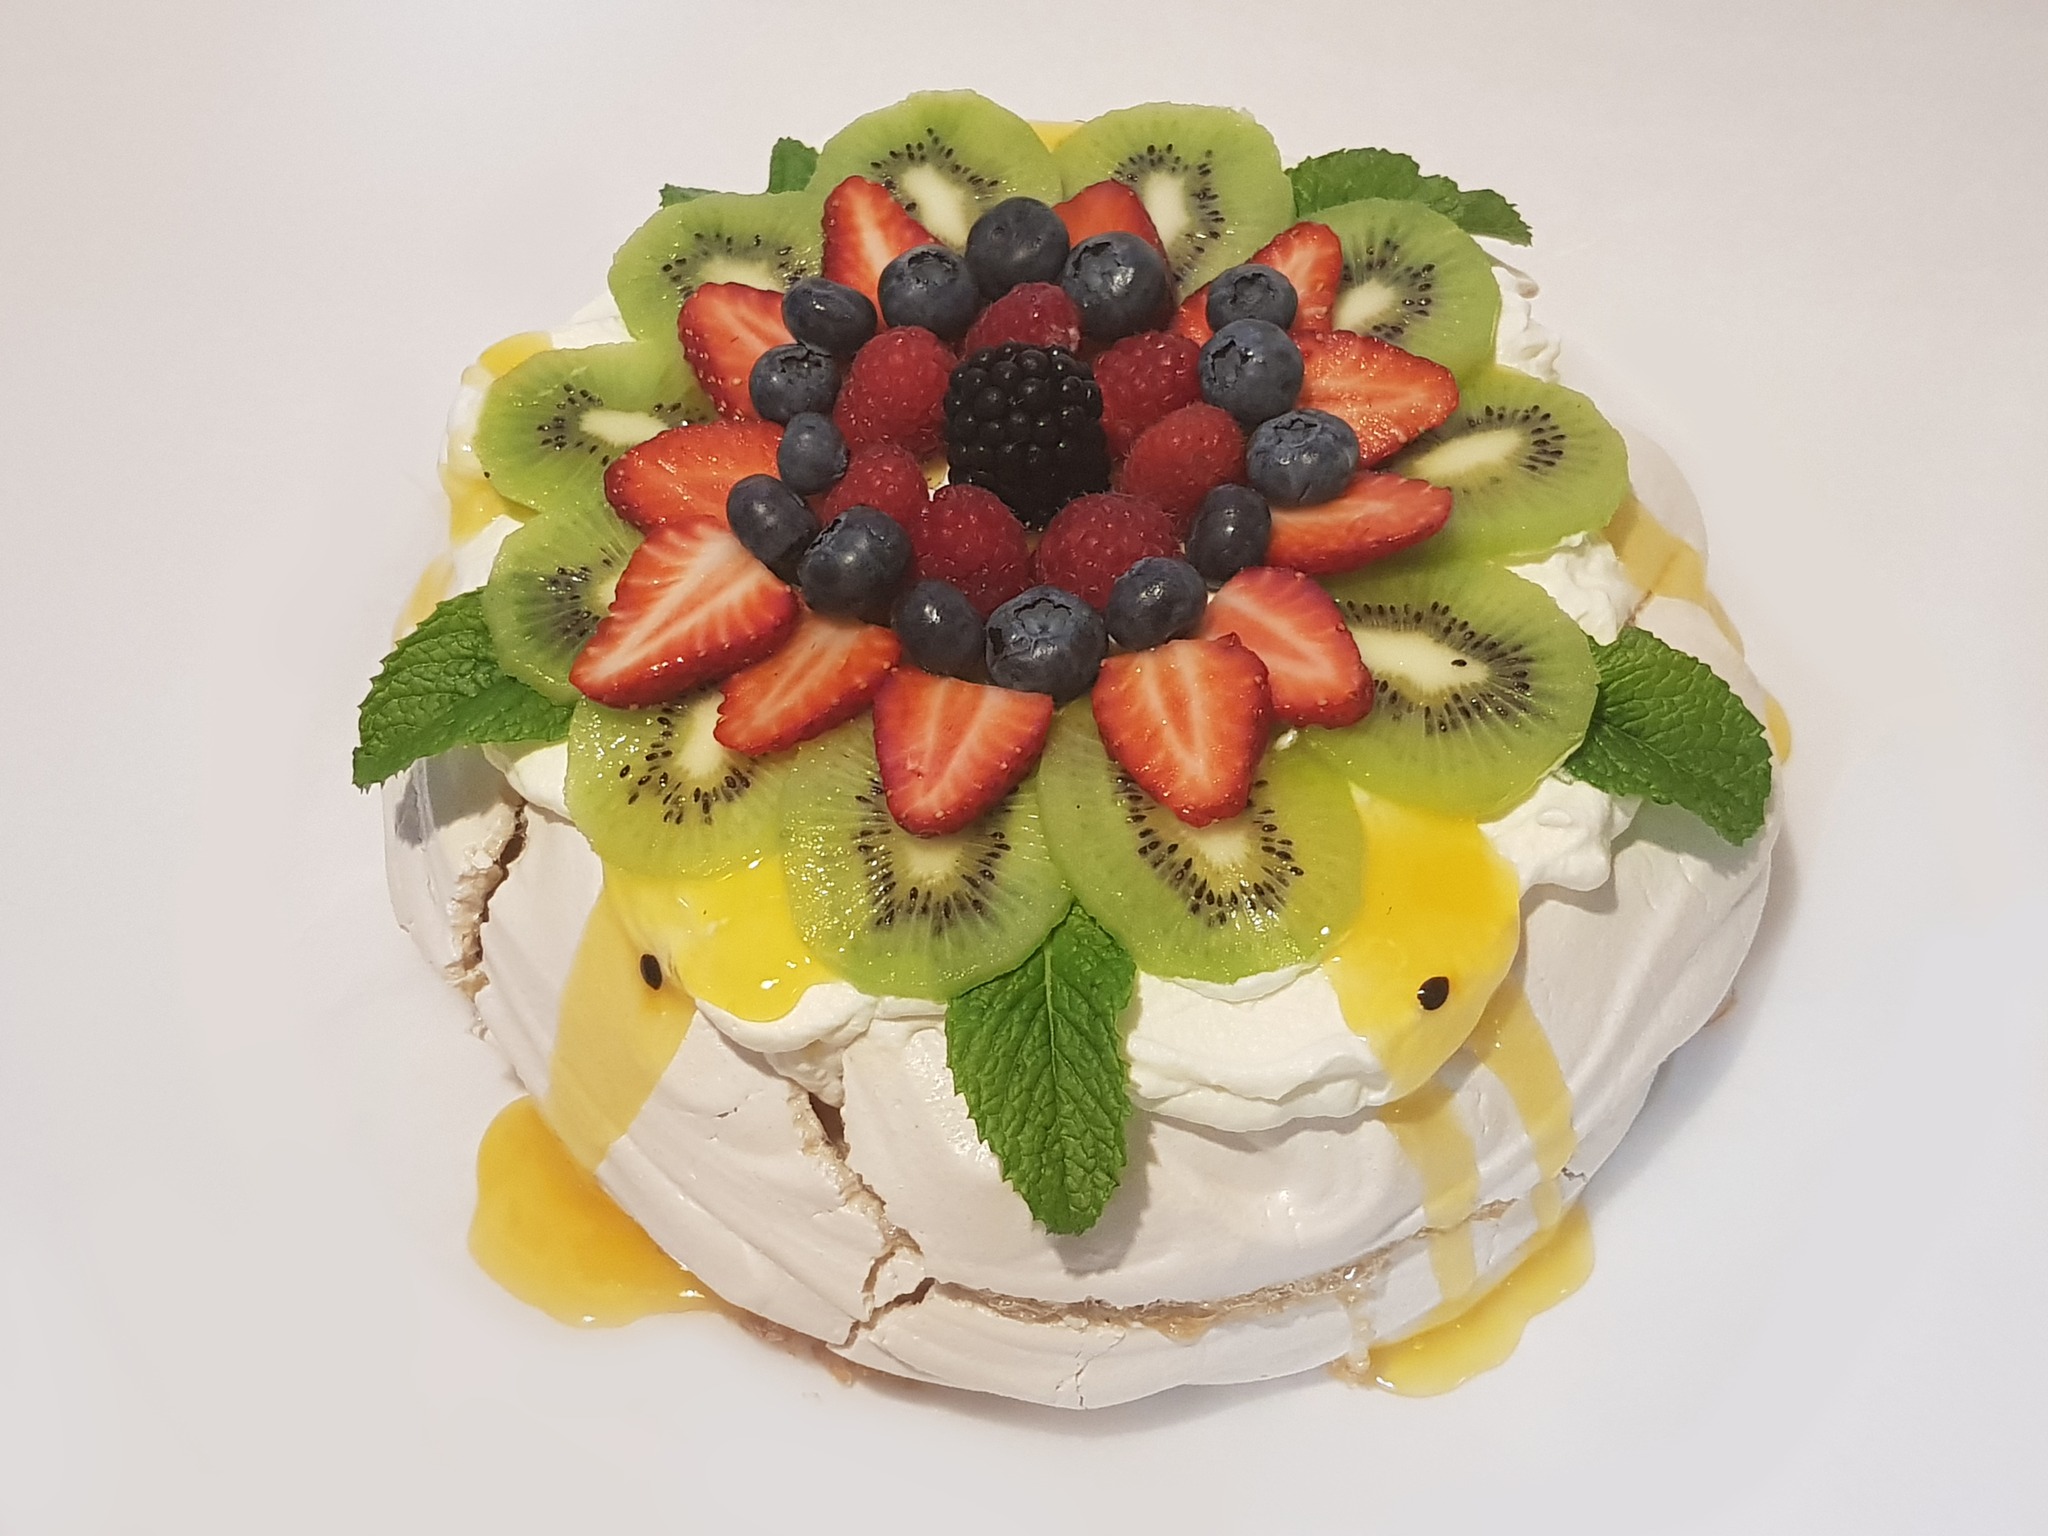 Pavlova (dessert) - Wikipedia